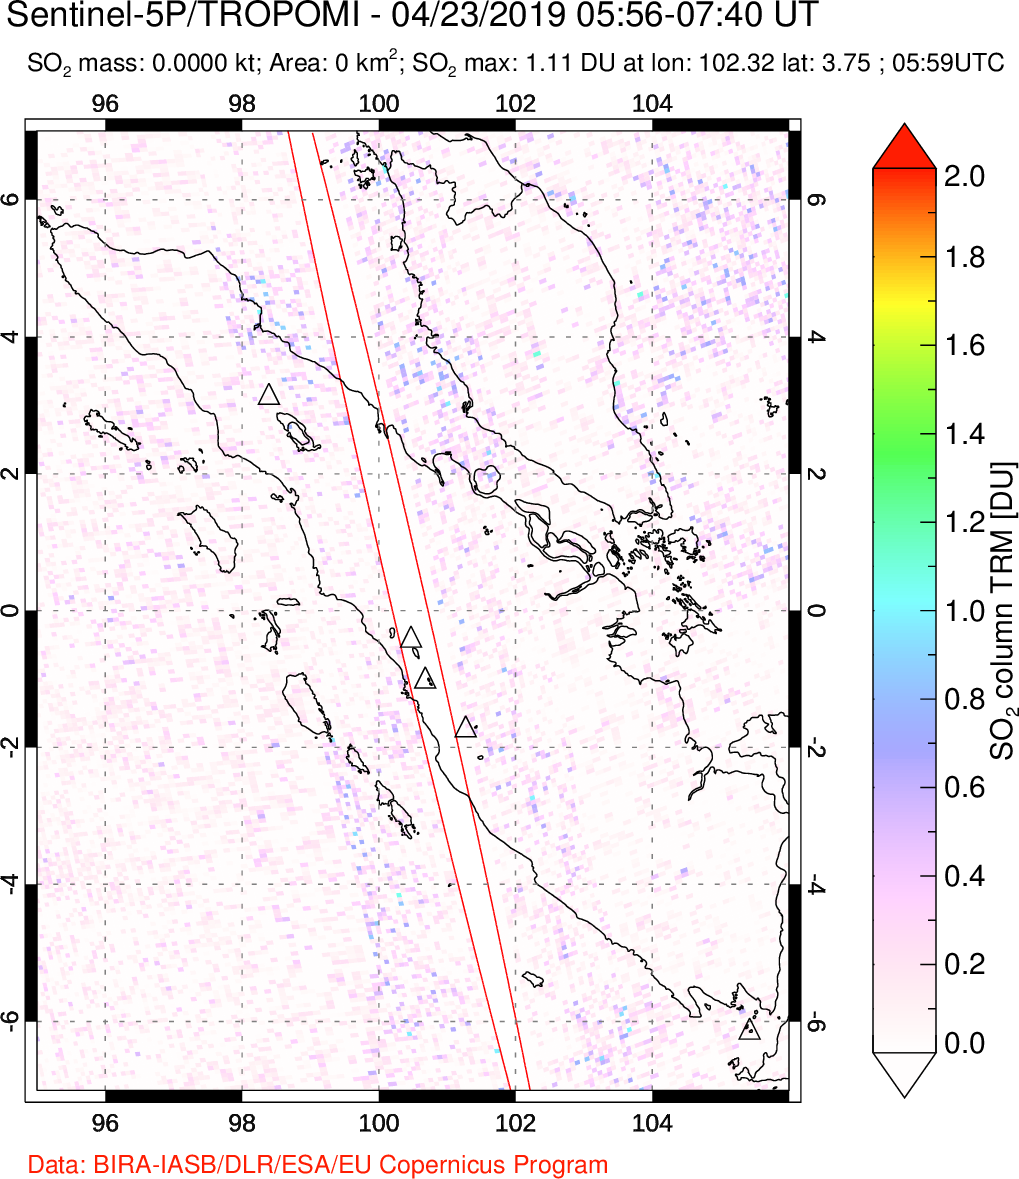 A sulfur dioxide image over Sumatra, Indonesia on Apr 23, 2019.